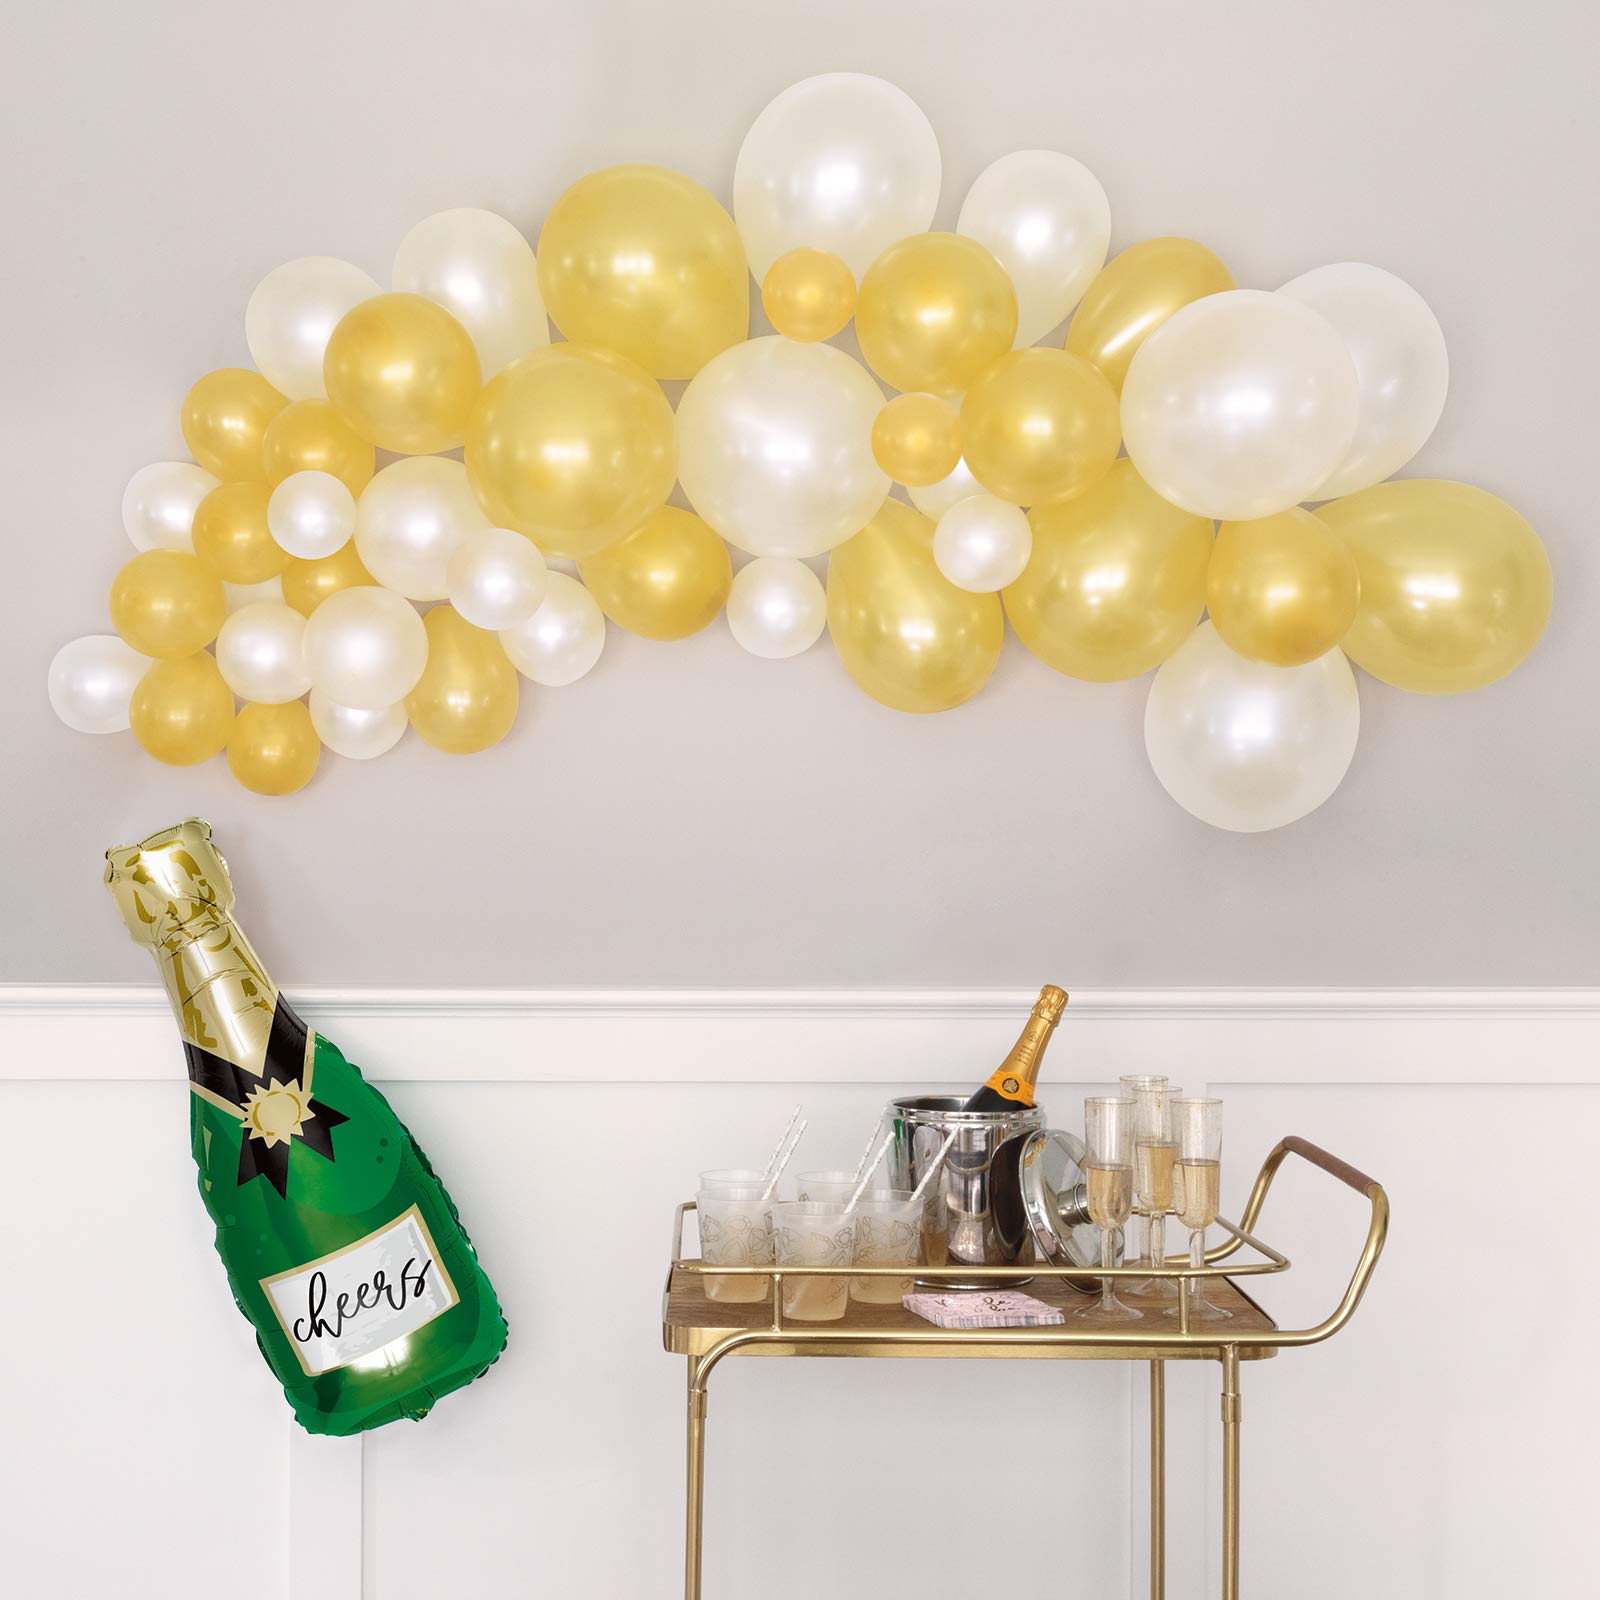 Champagne Bottle Balloon, 36in